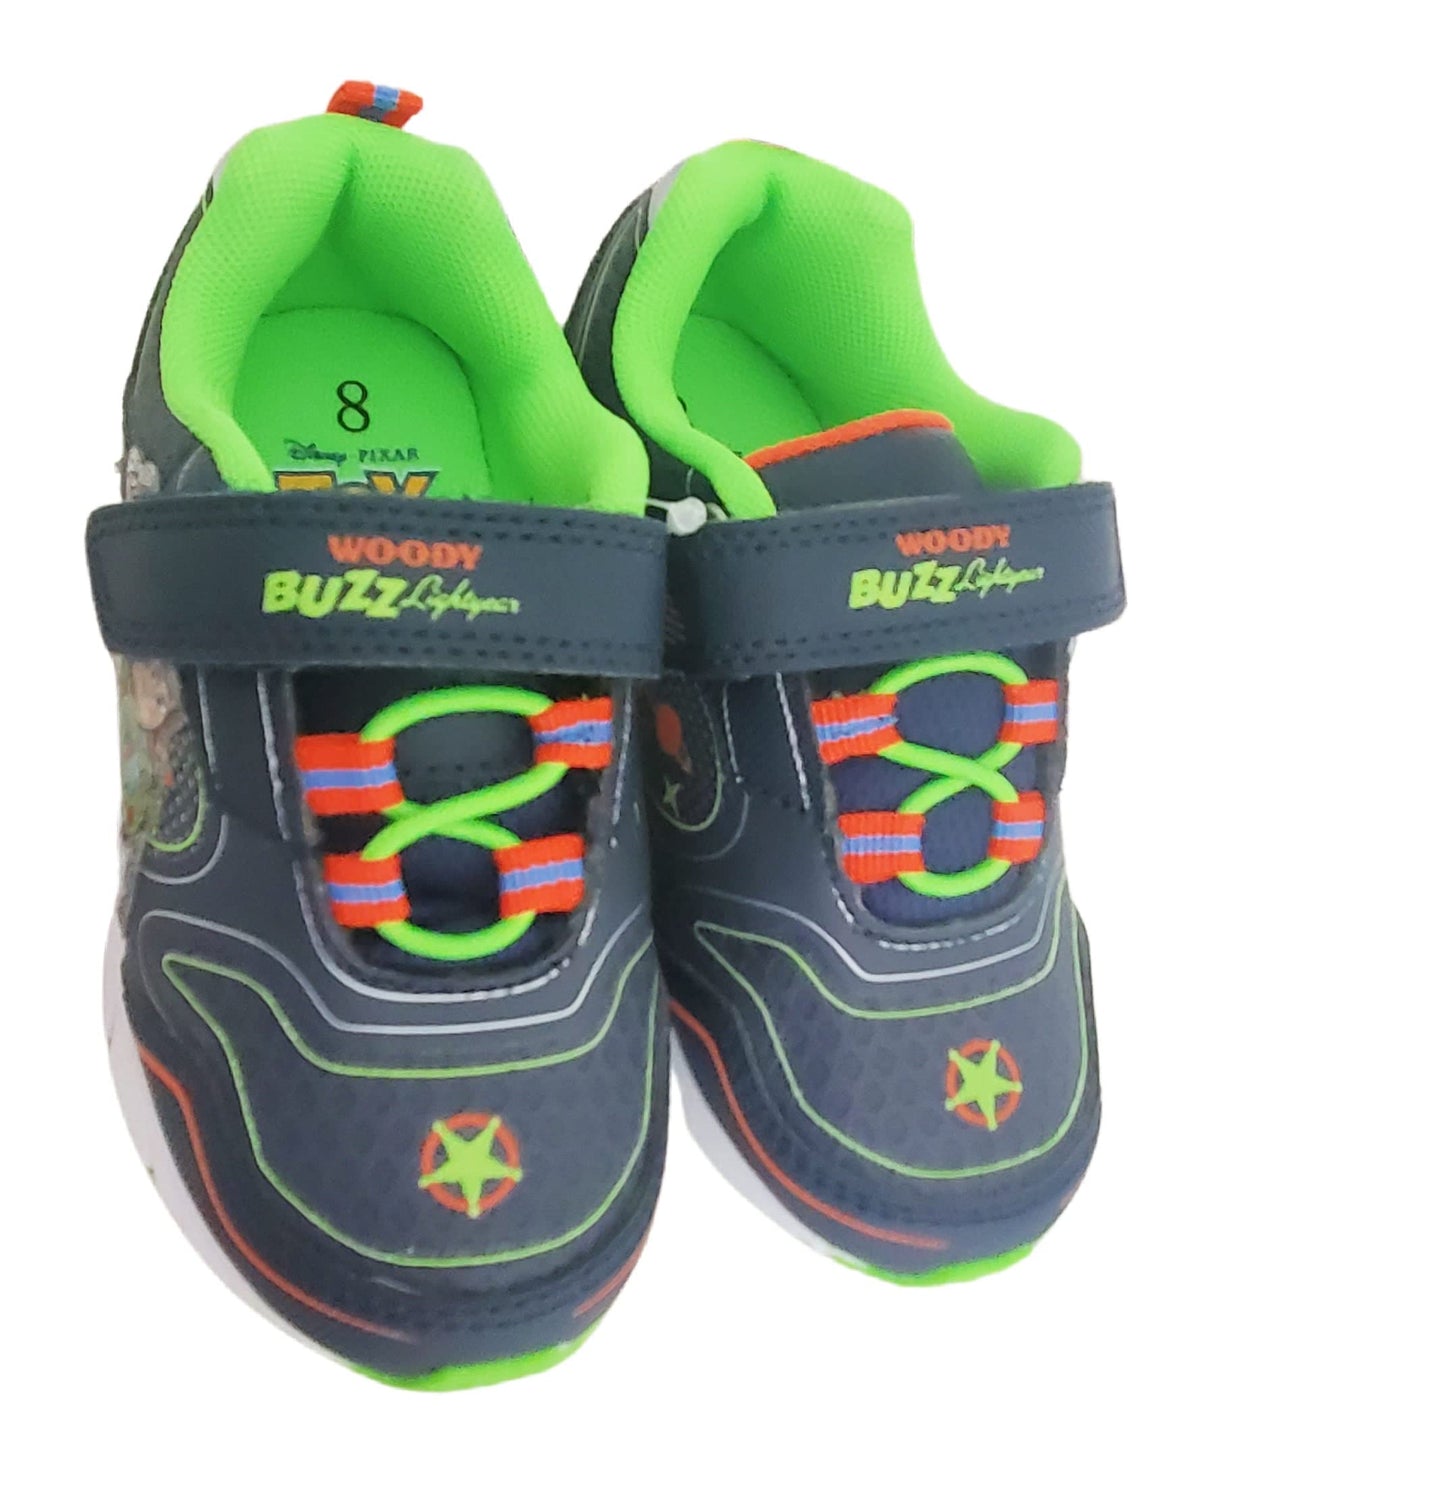 Disney Pixar Toy Story 4 Boy's Lighted Athletic Sneaker, Black/Green (Toddler/Little Kid)